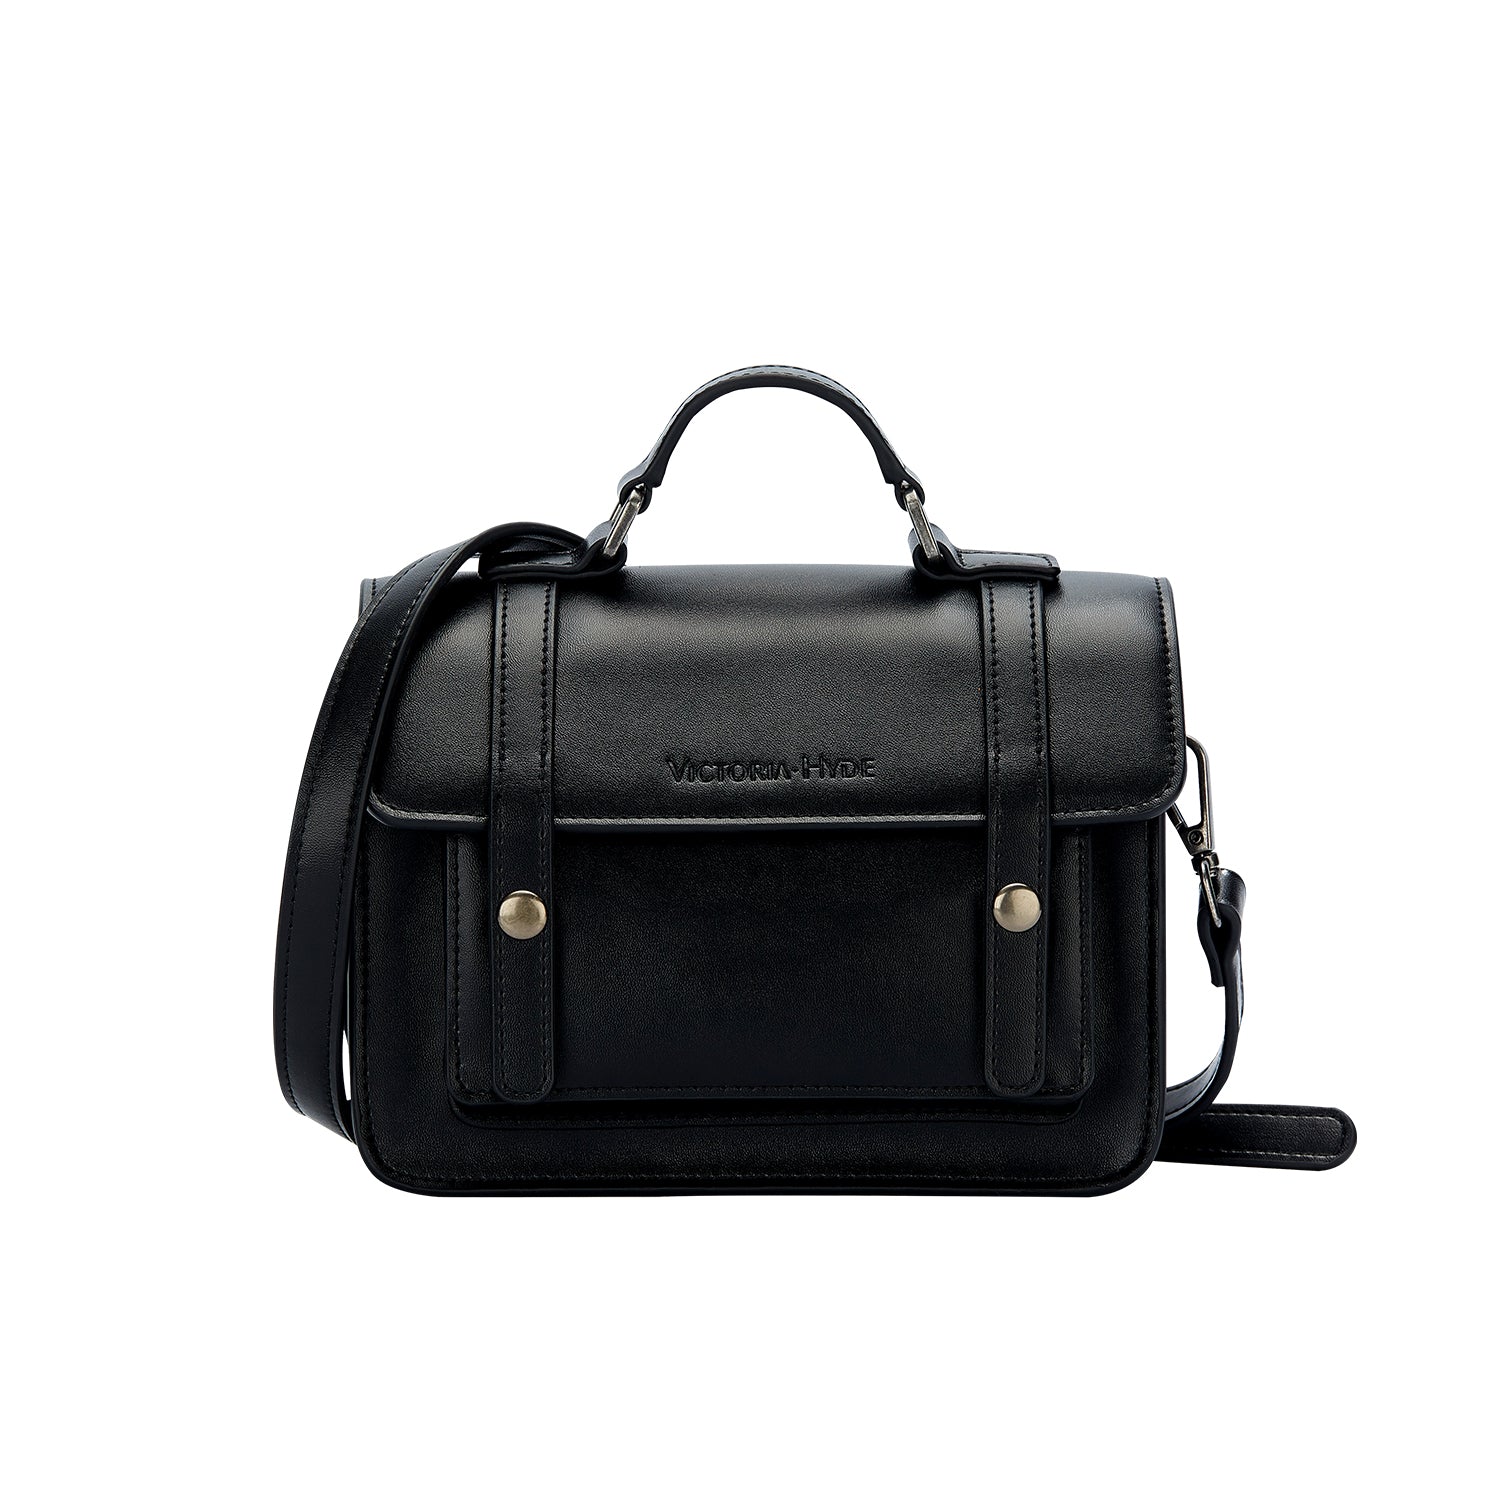 Handbag Satchel Bag in Black